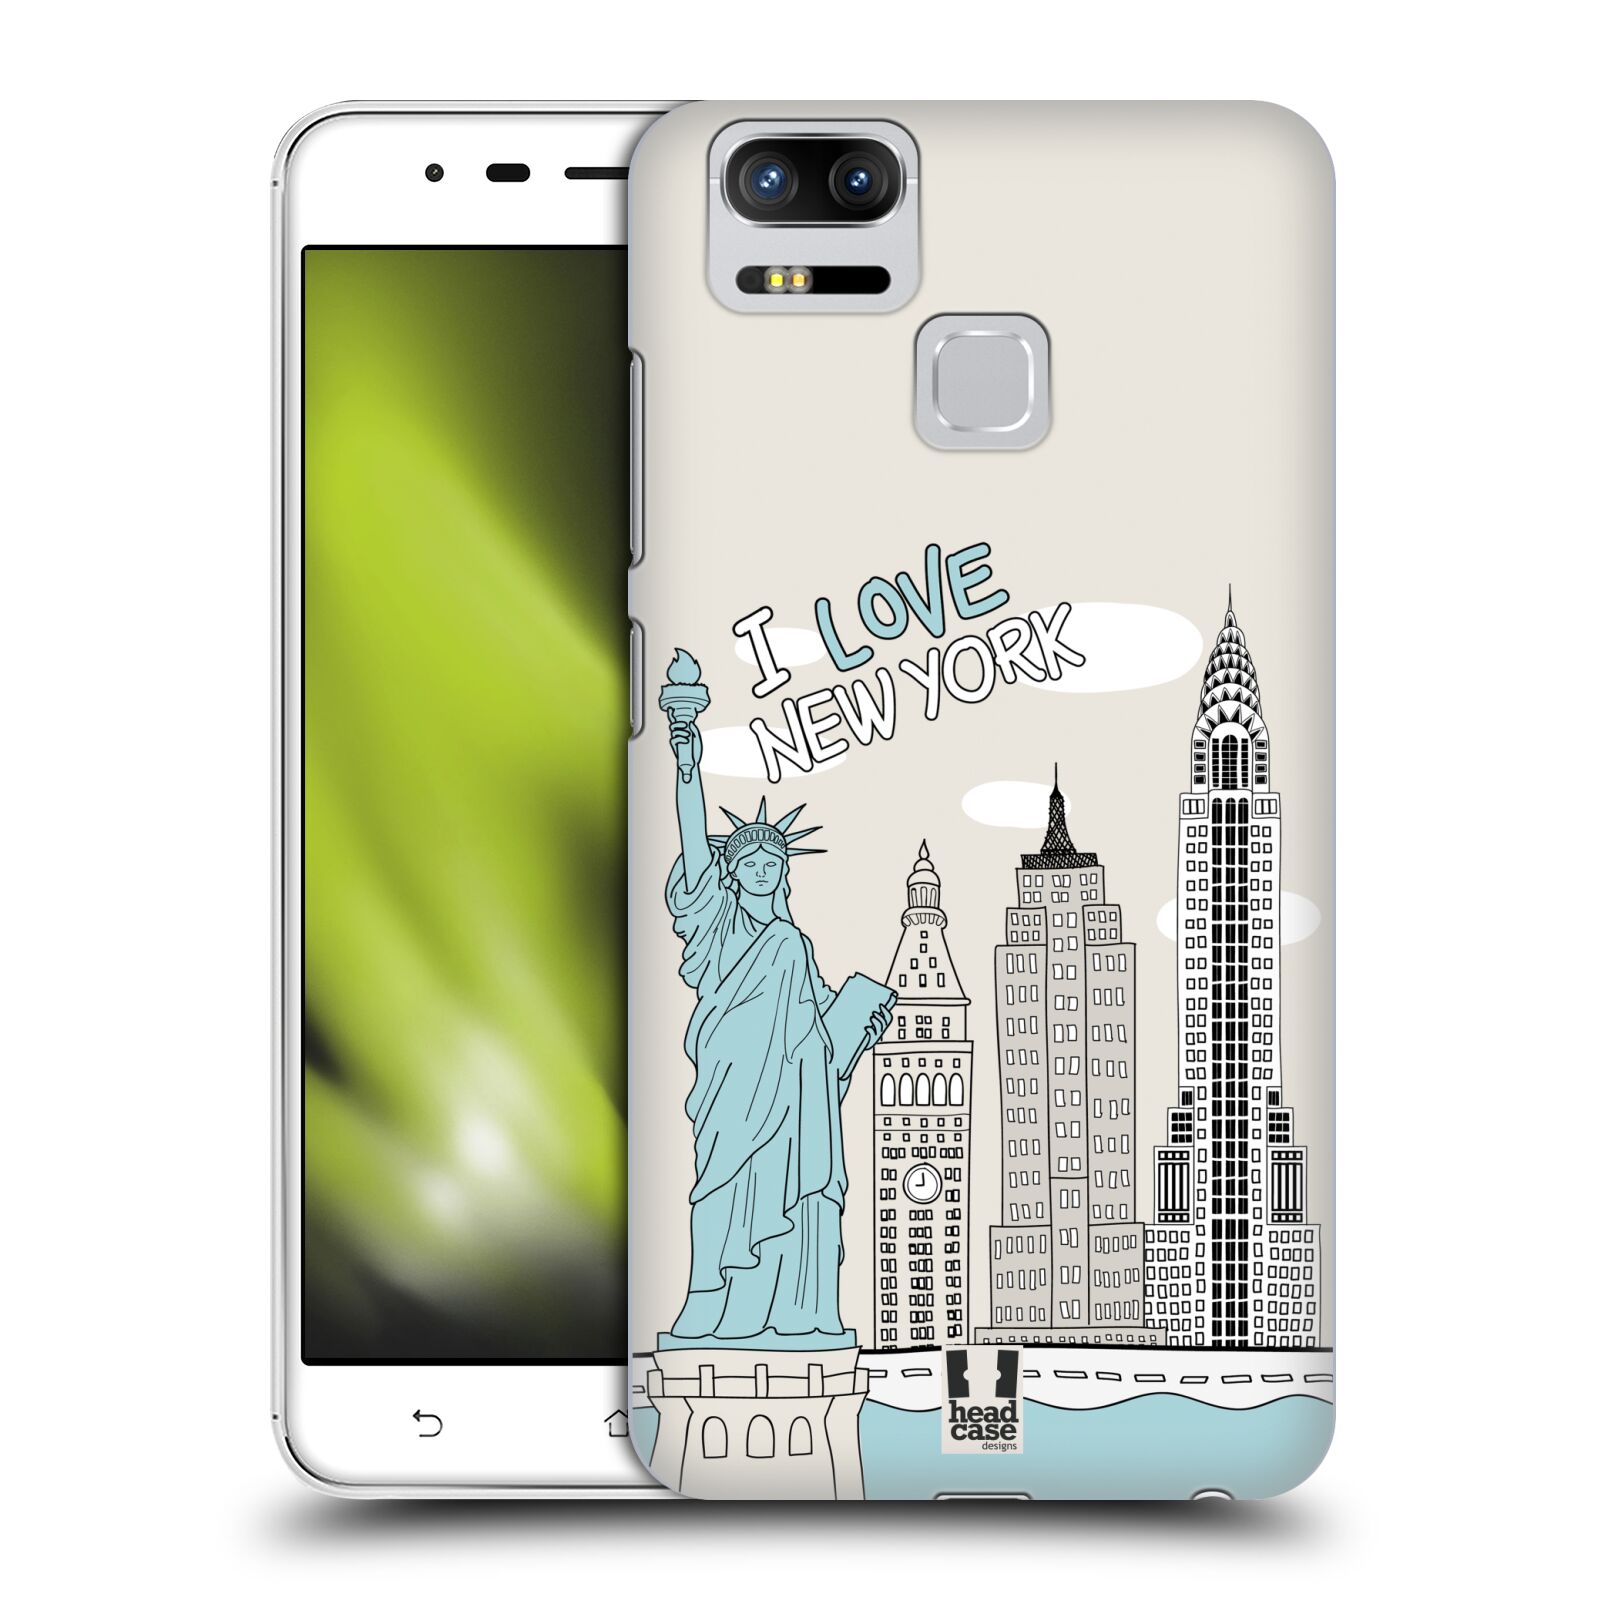 HEAD CASE plastový obal na mobil Asus Zenfone 3 Zoom ZE553KL vzor Kreslená městečka MODRÁ, USA, New York, I LOVE NEW YORK